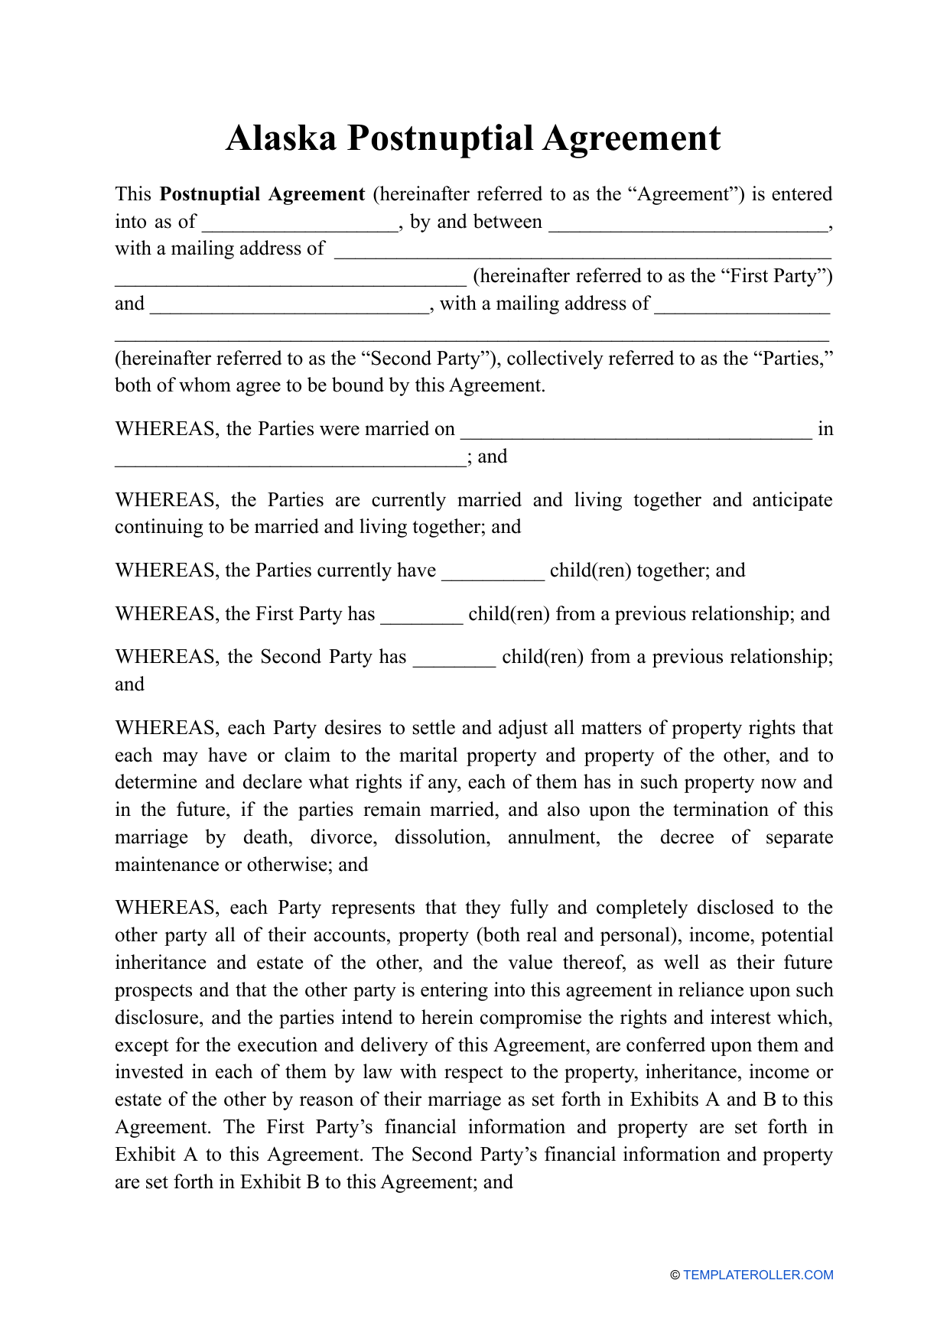 Postnuptial Agreement Template - Alaska, Page 1